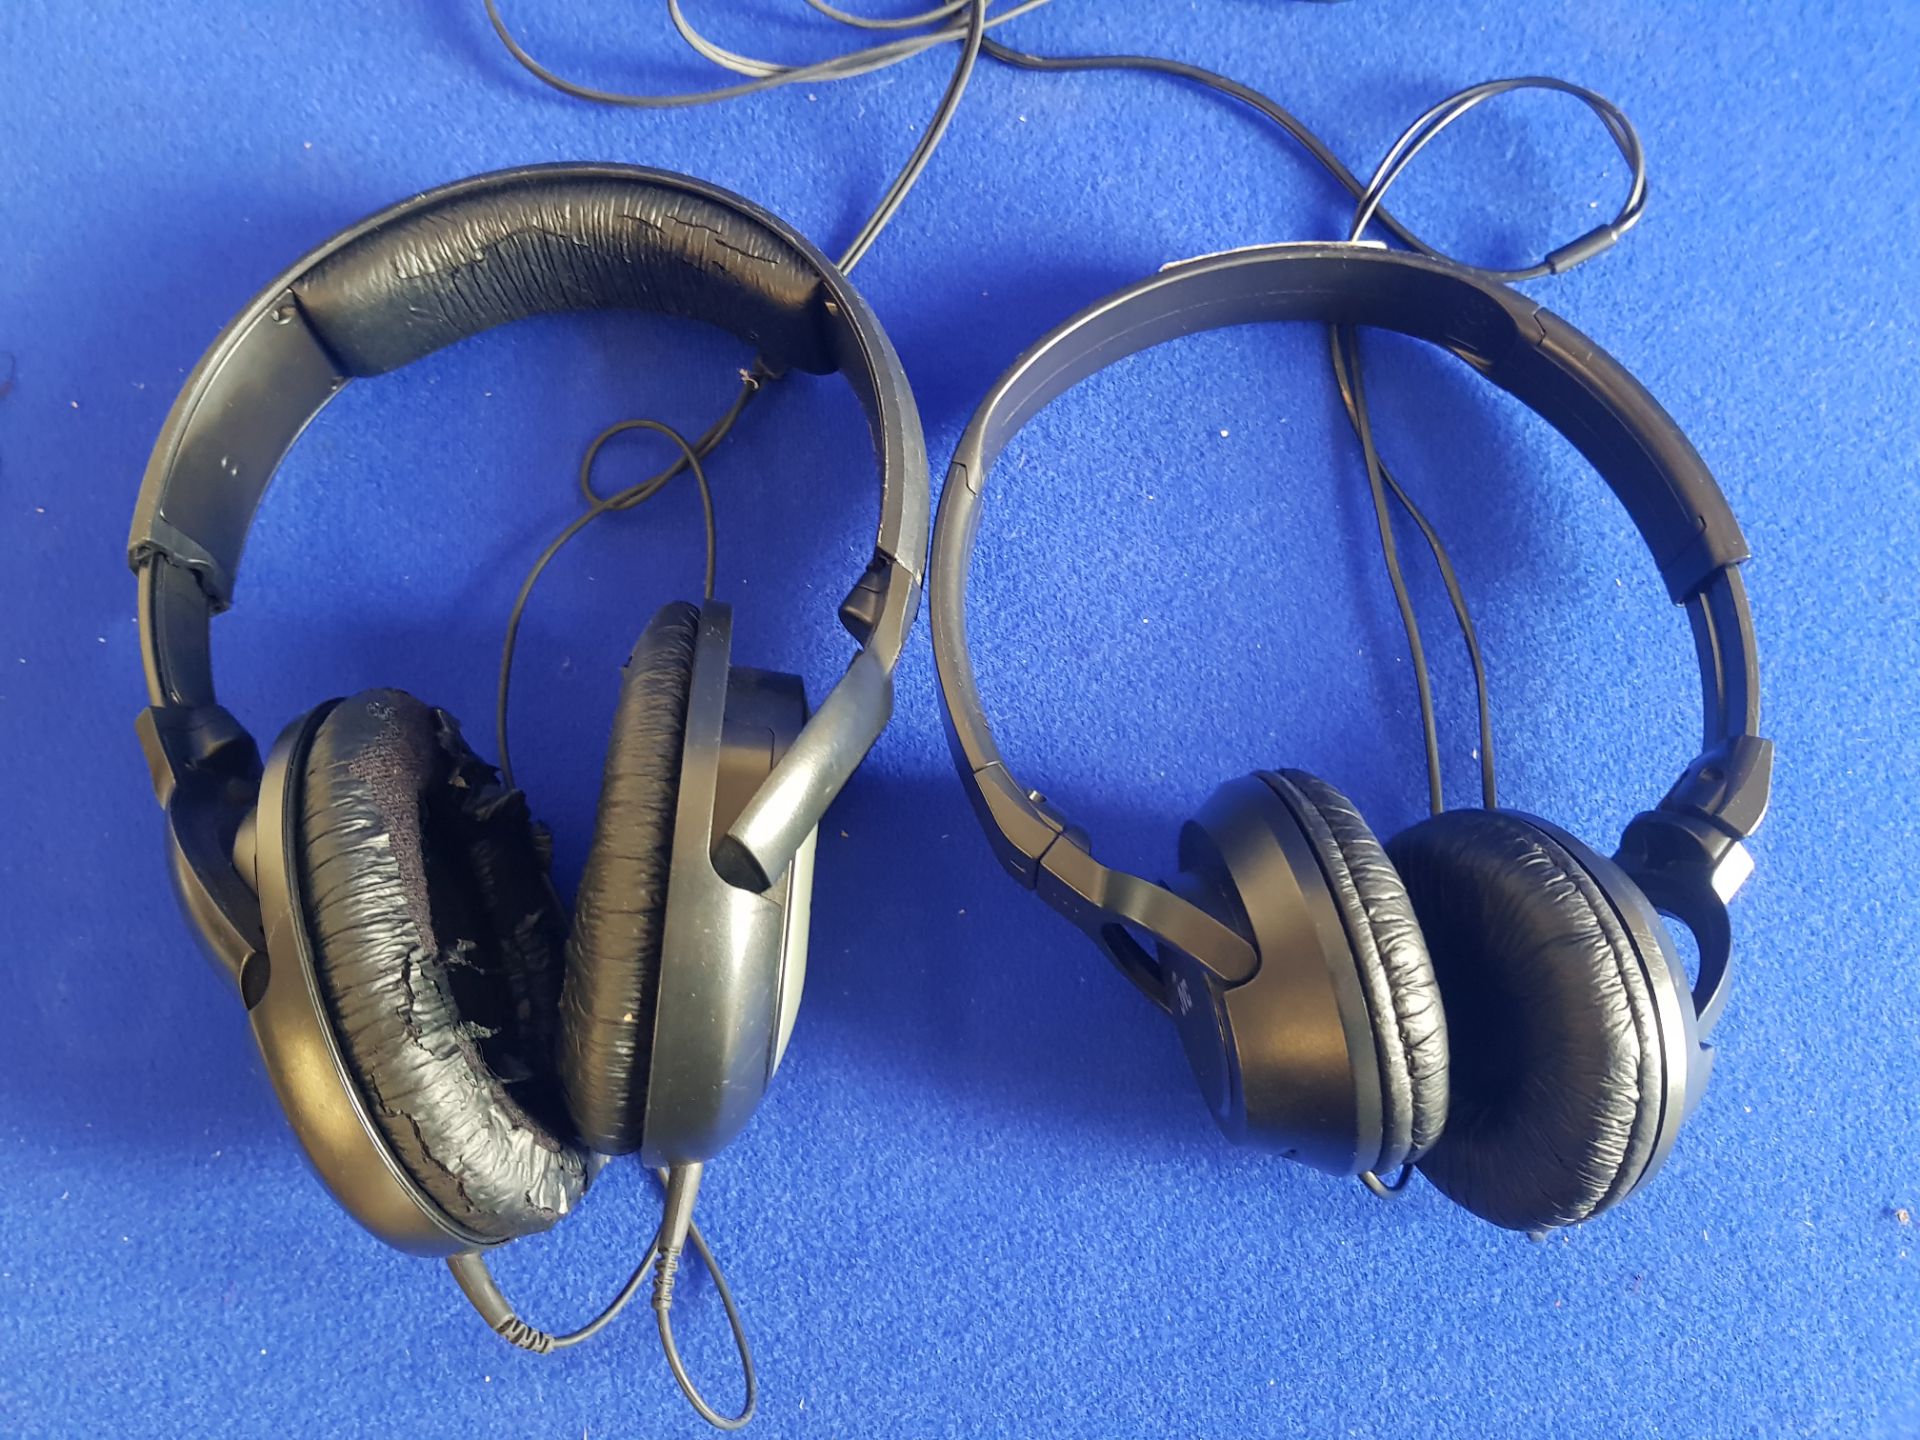 1x JVC Headphones And 1x Sennheiser Headphones